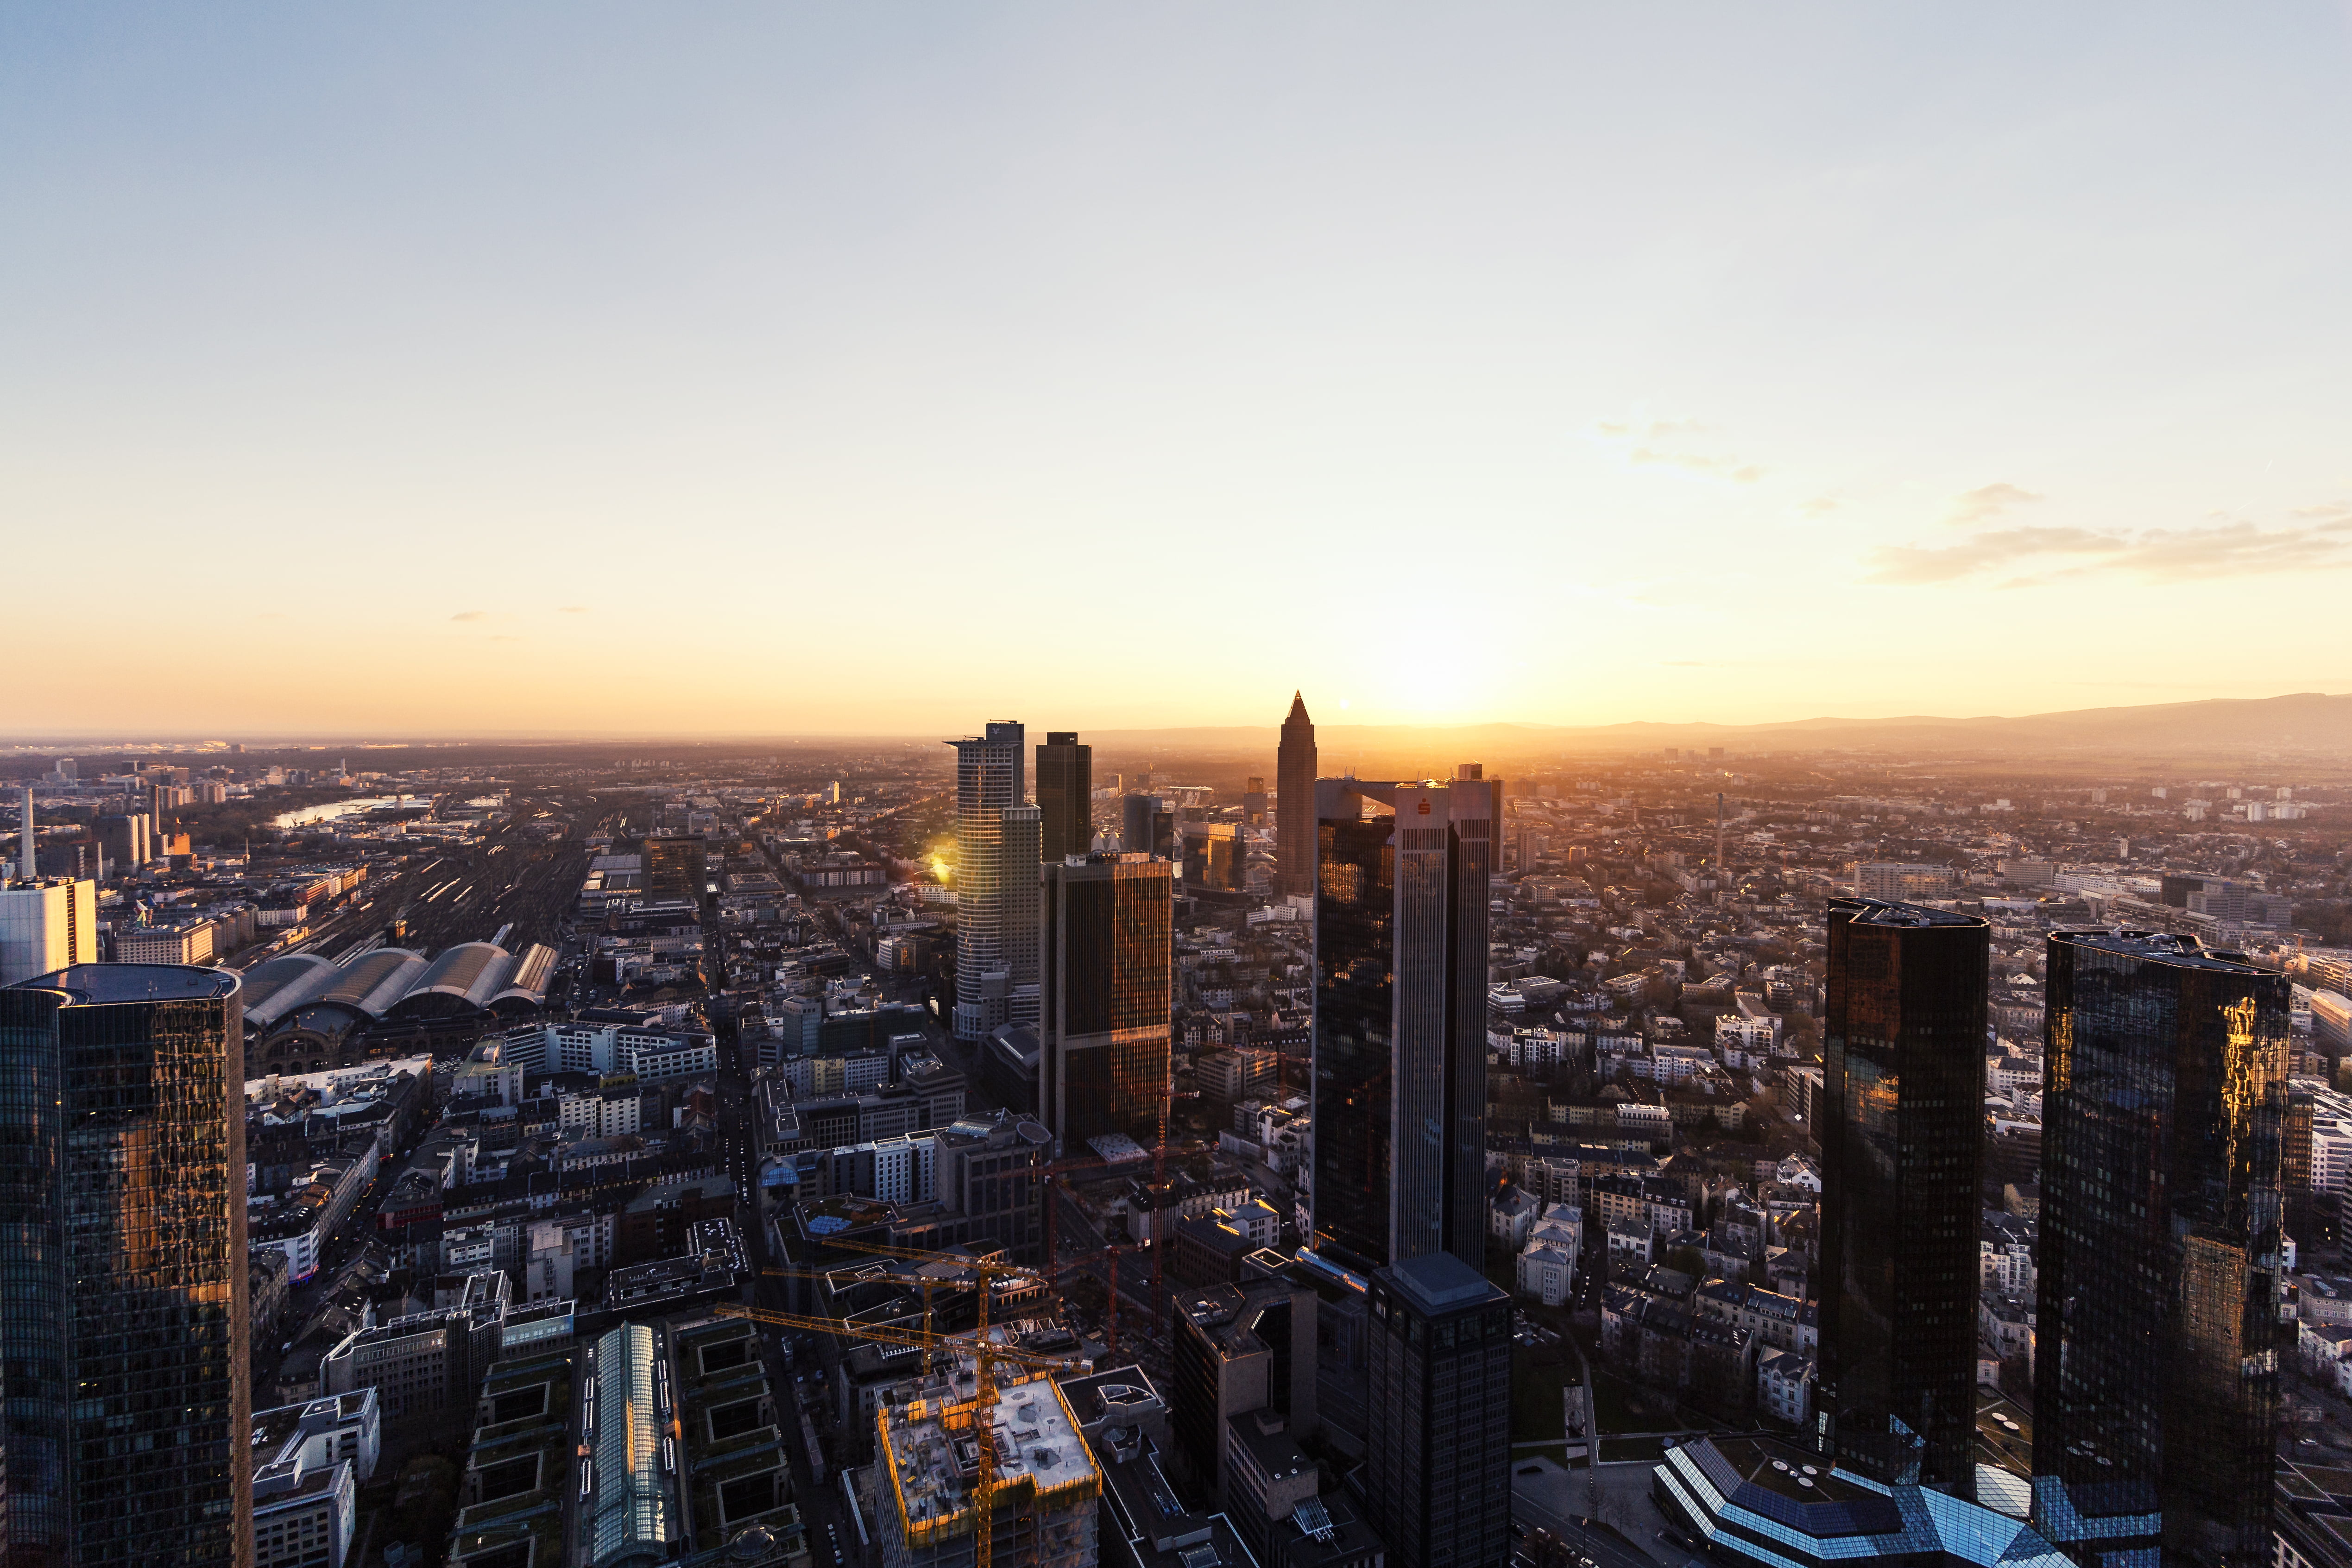 city buildings during sunset in aerial photography, frankfurt, frankfurt